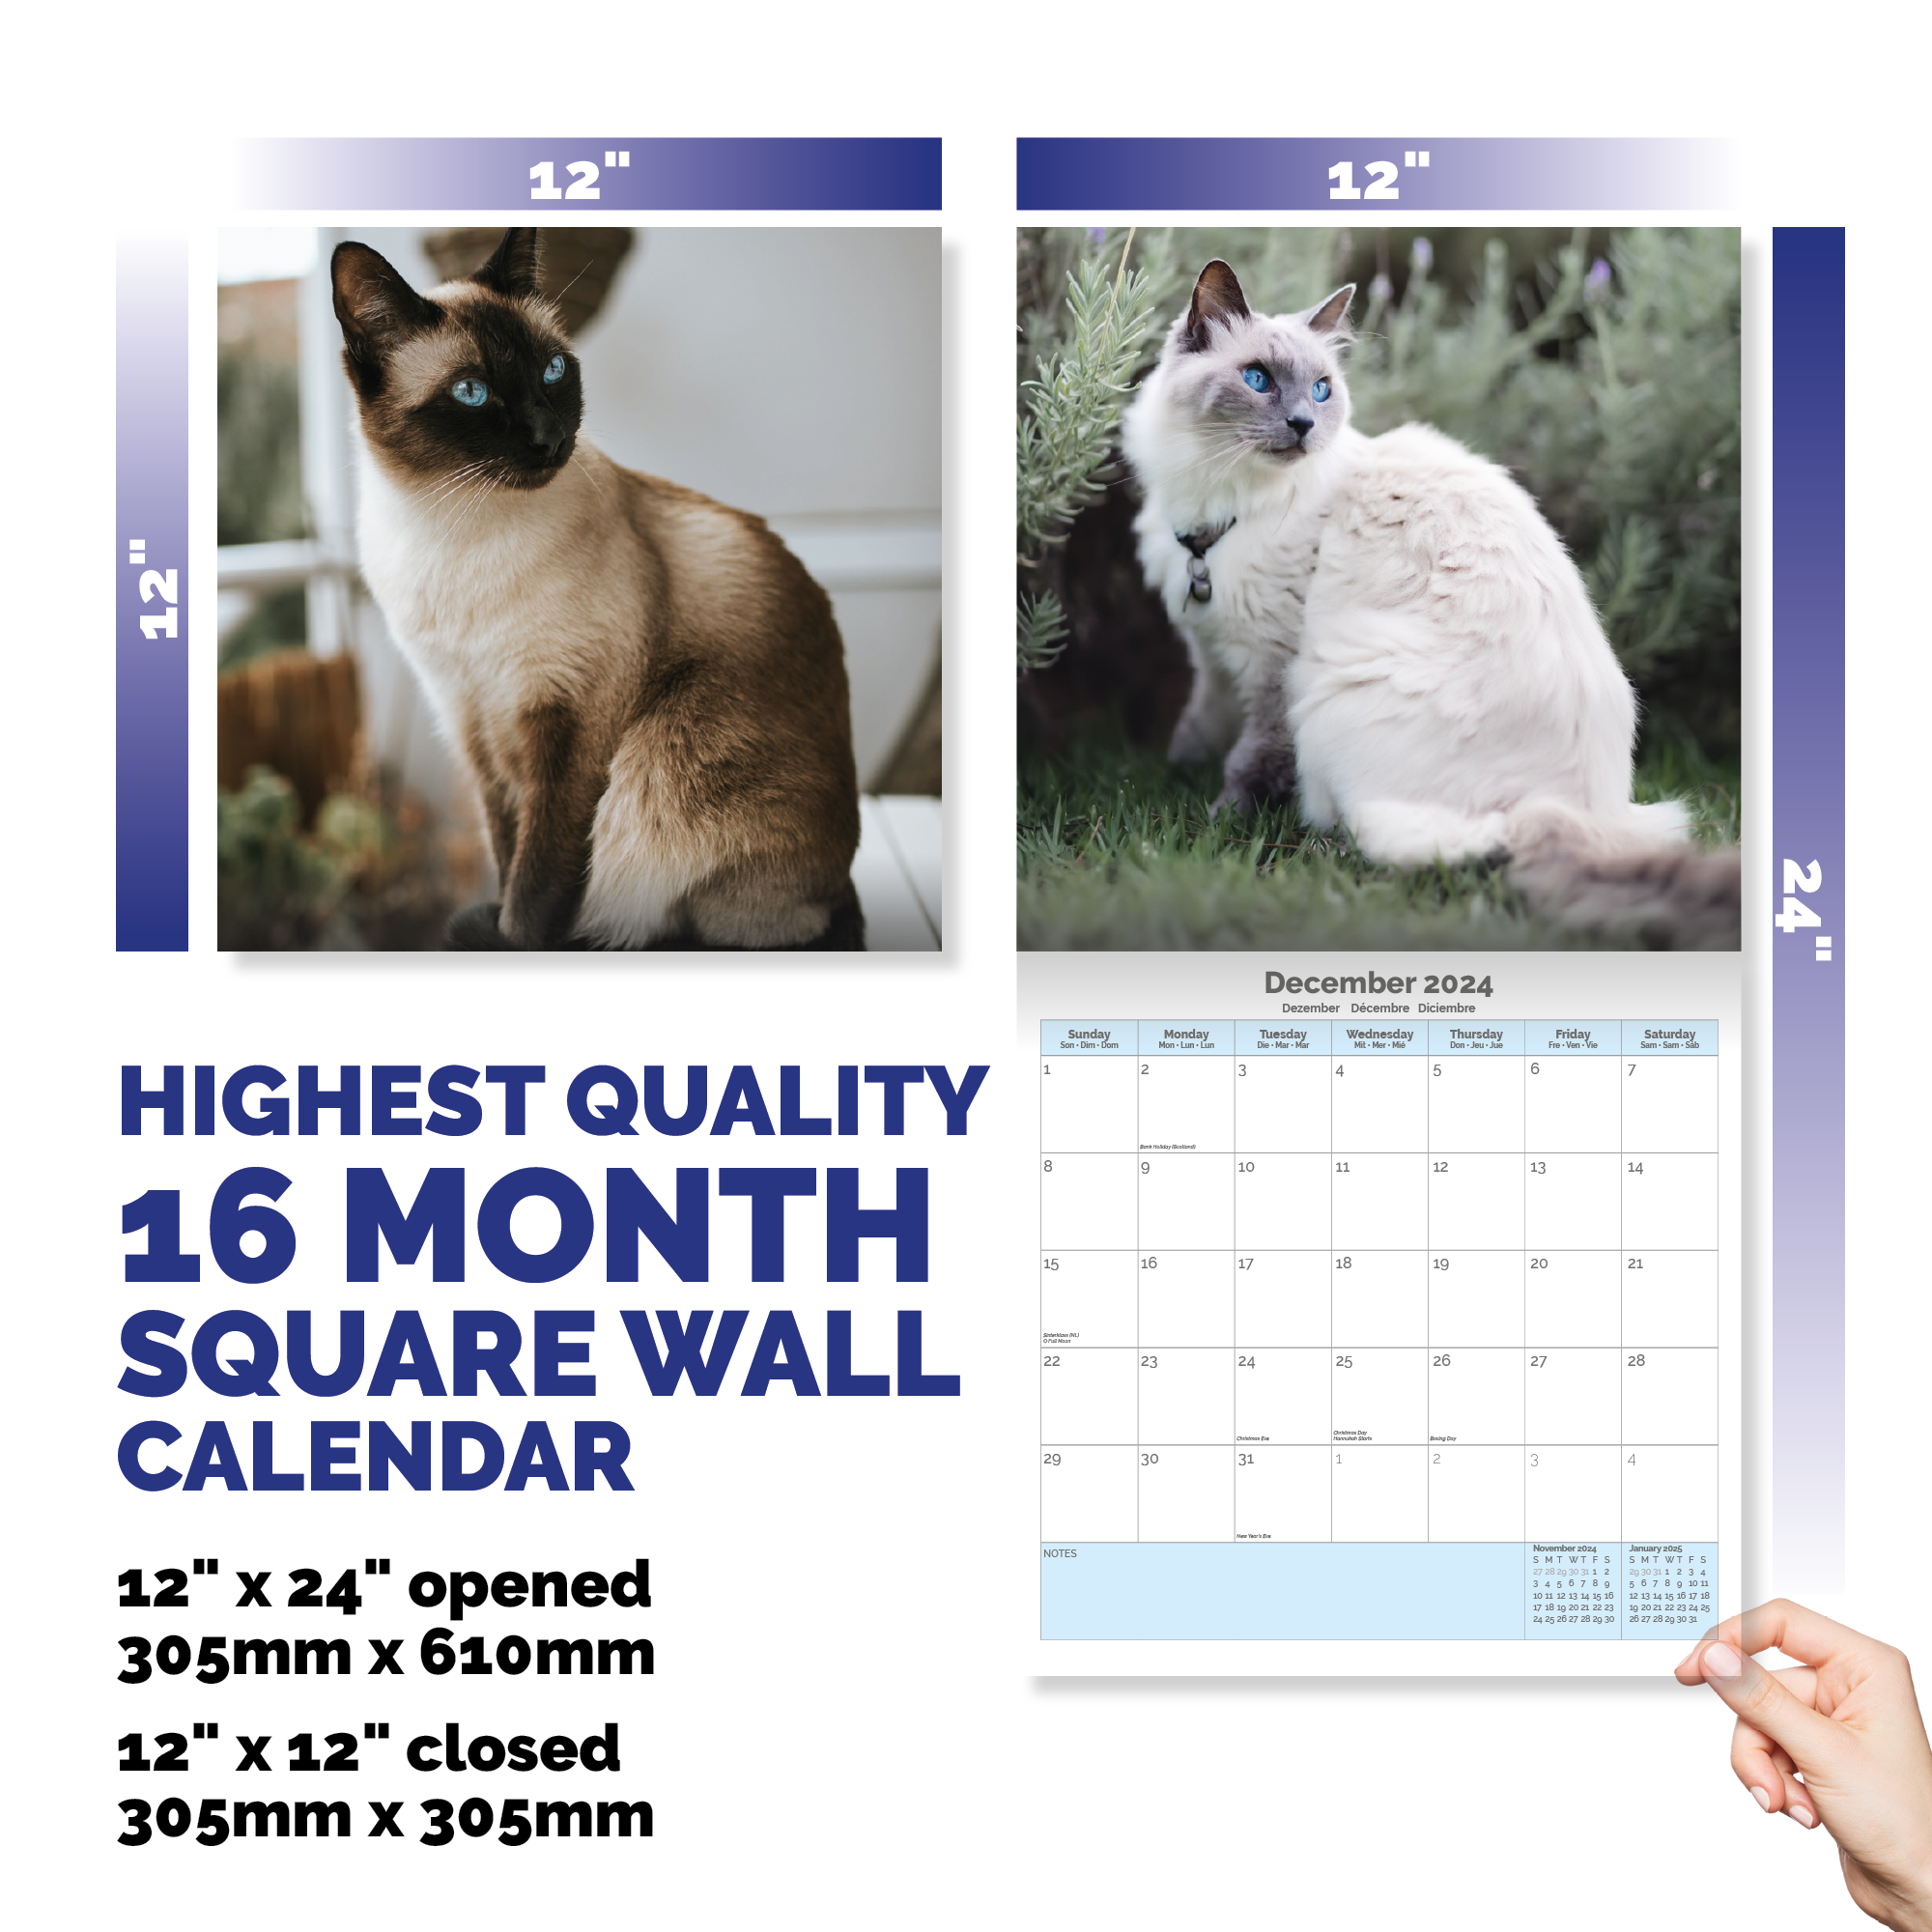 Siamese Cats Calendar 2024